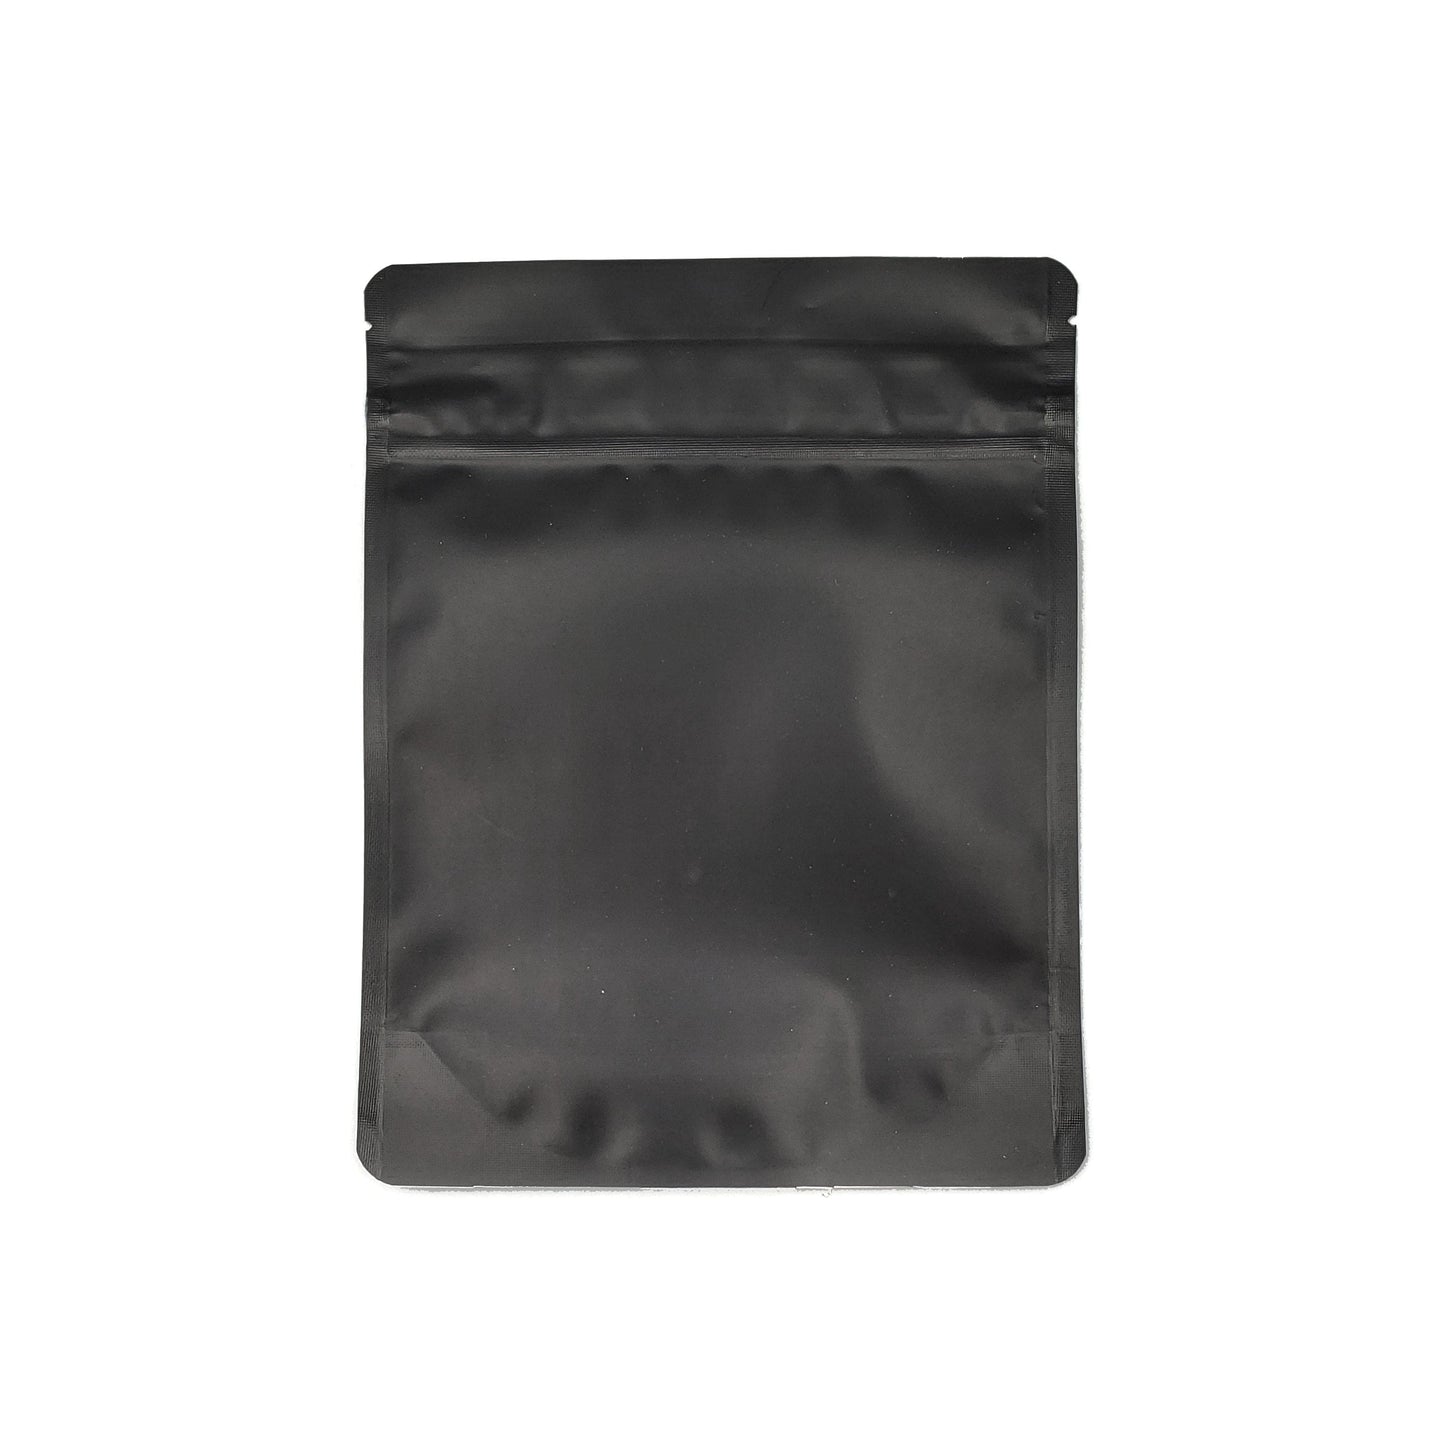 Bag King Child Resistant Opaque Exit Bag (8x6)